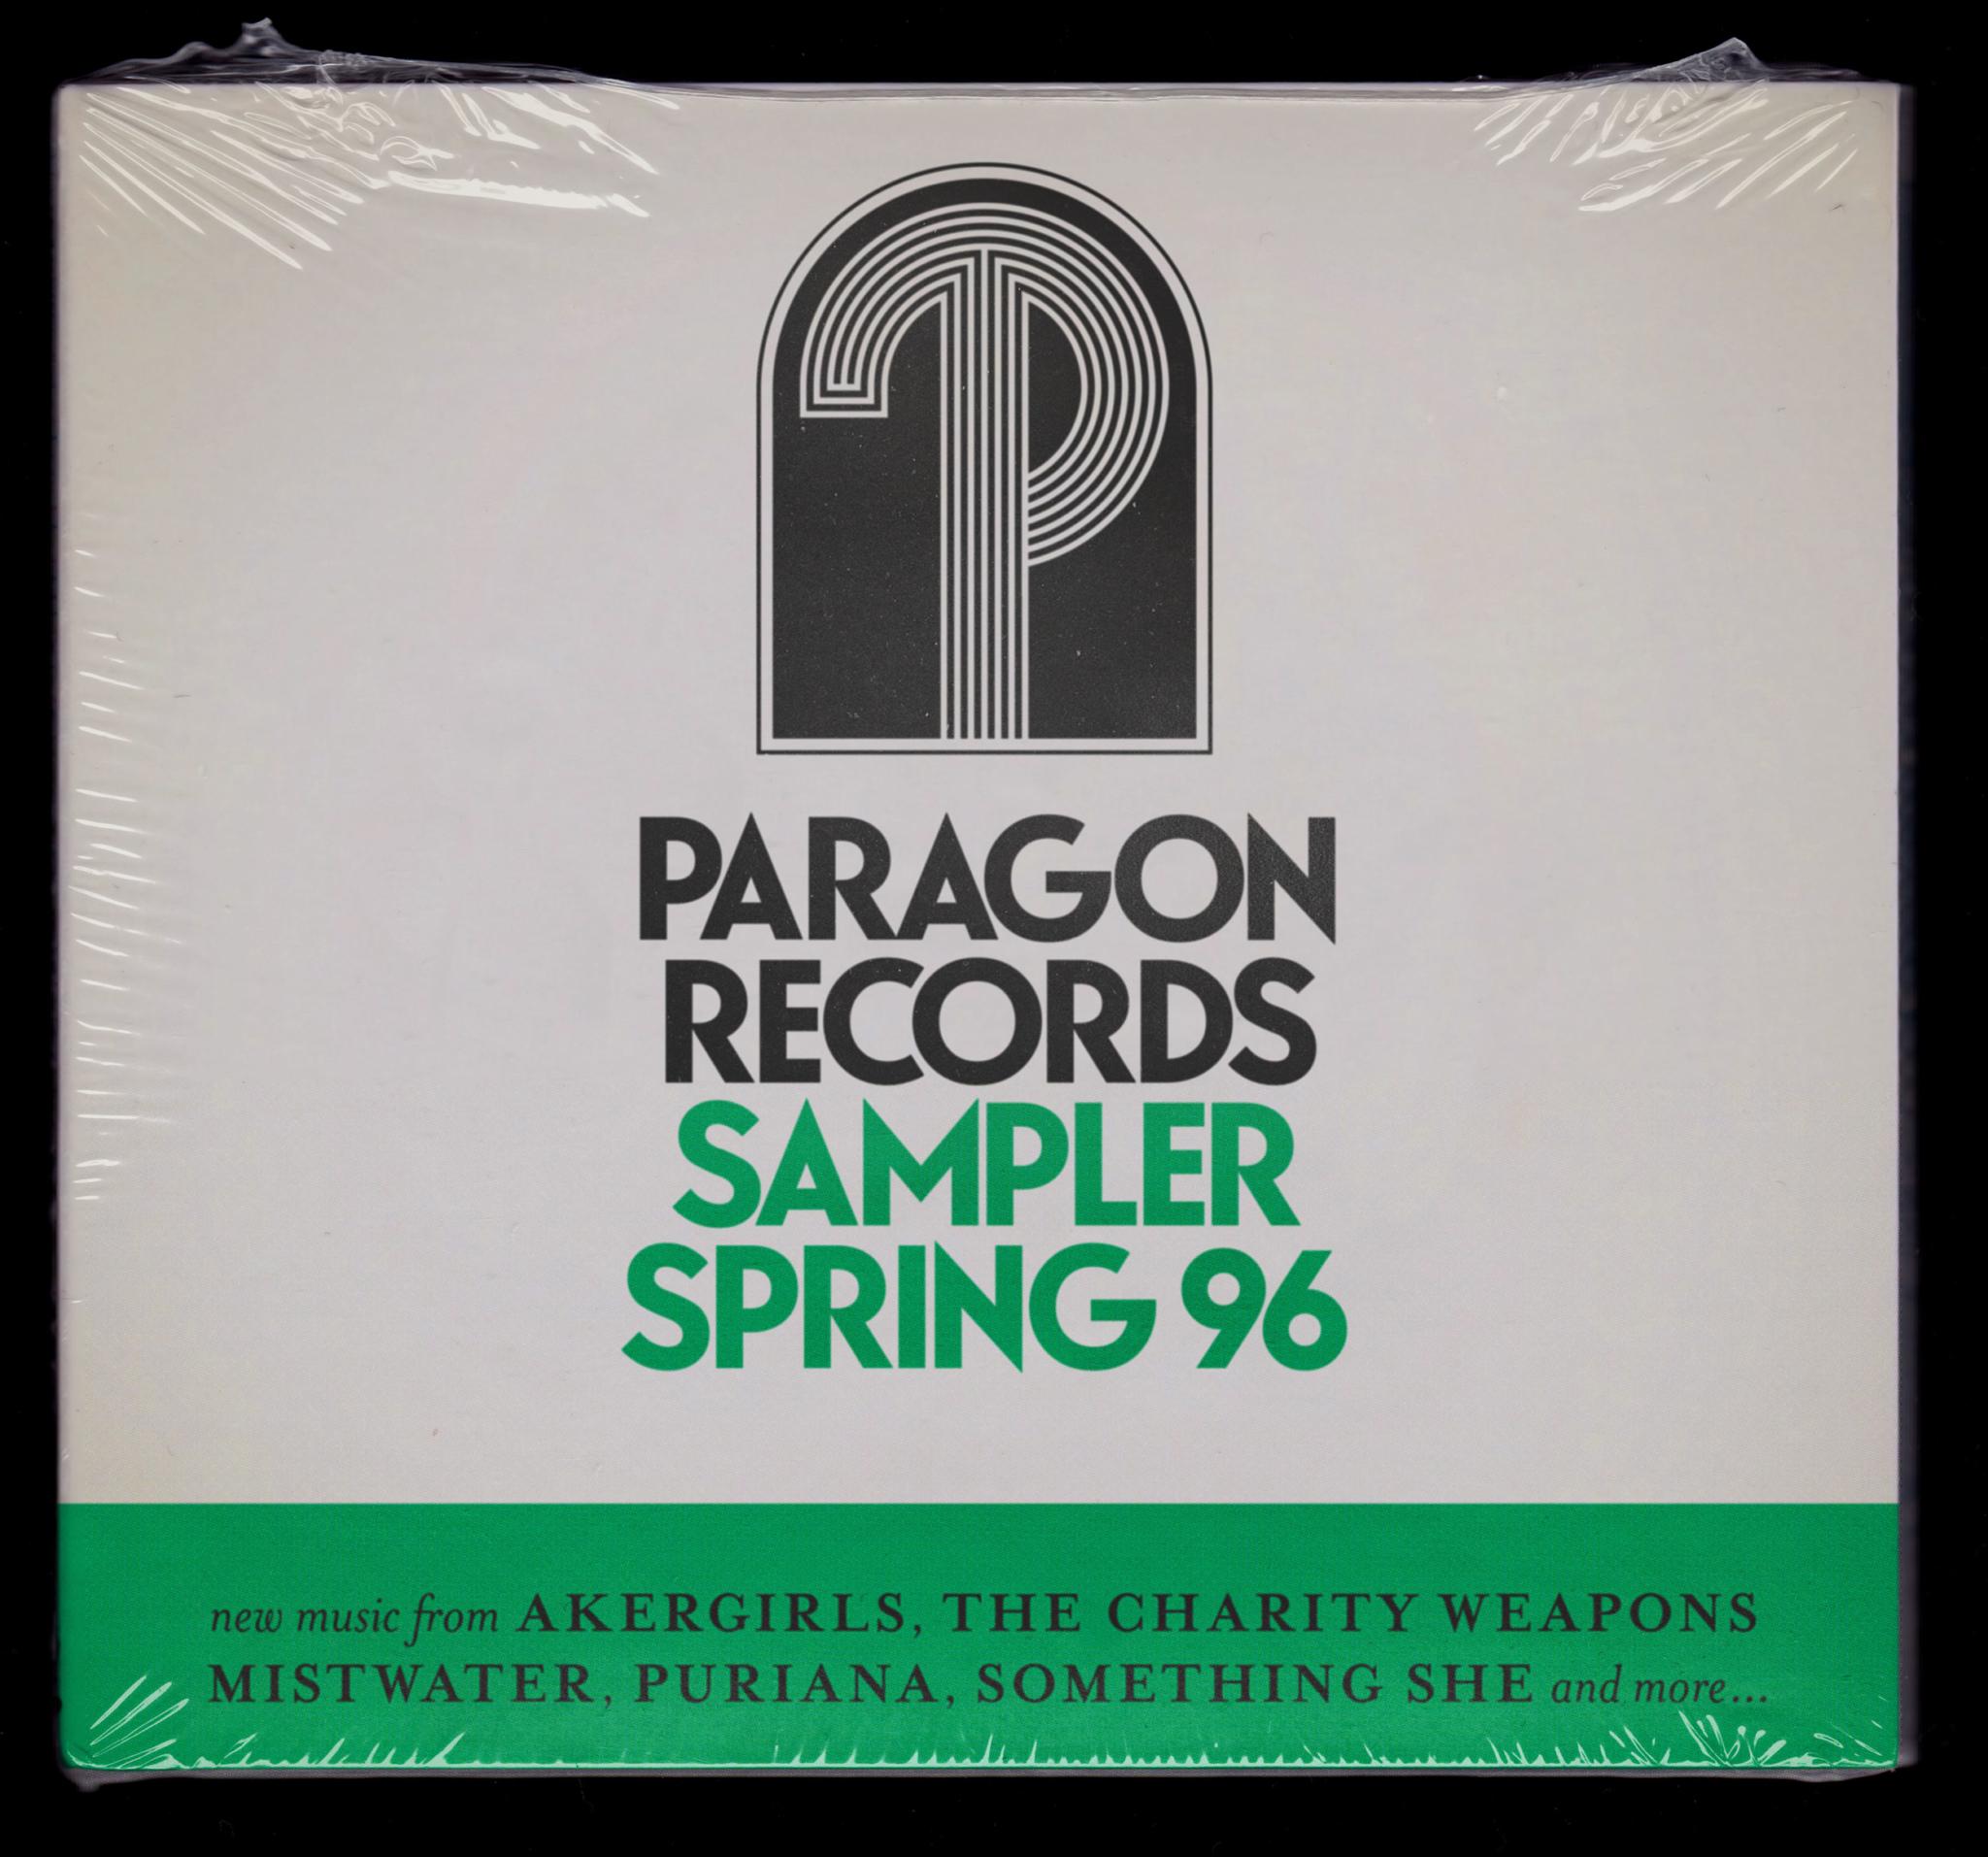 Paragon Records Sampler